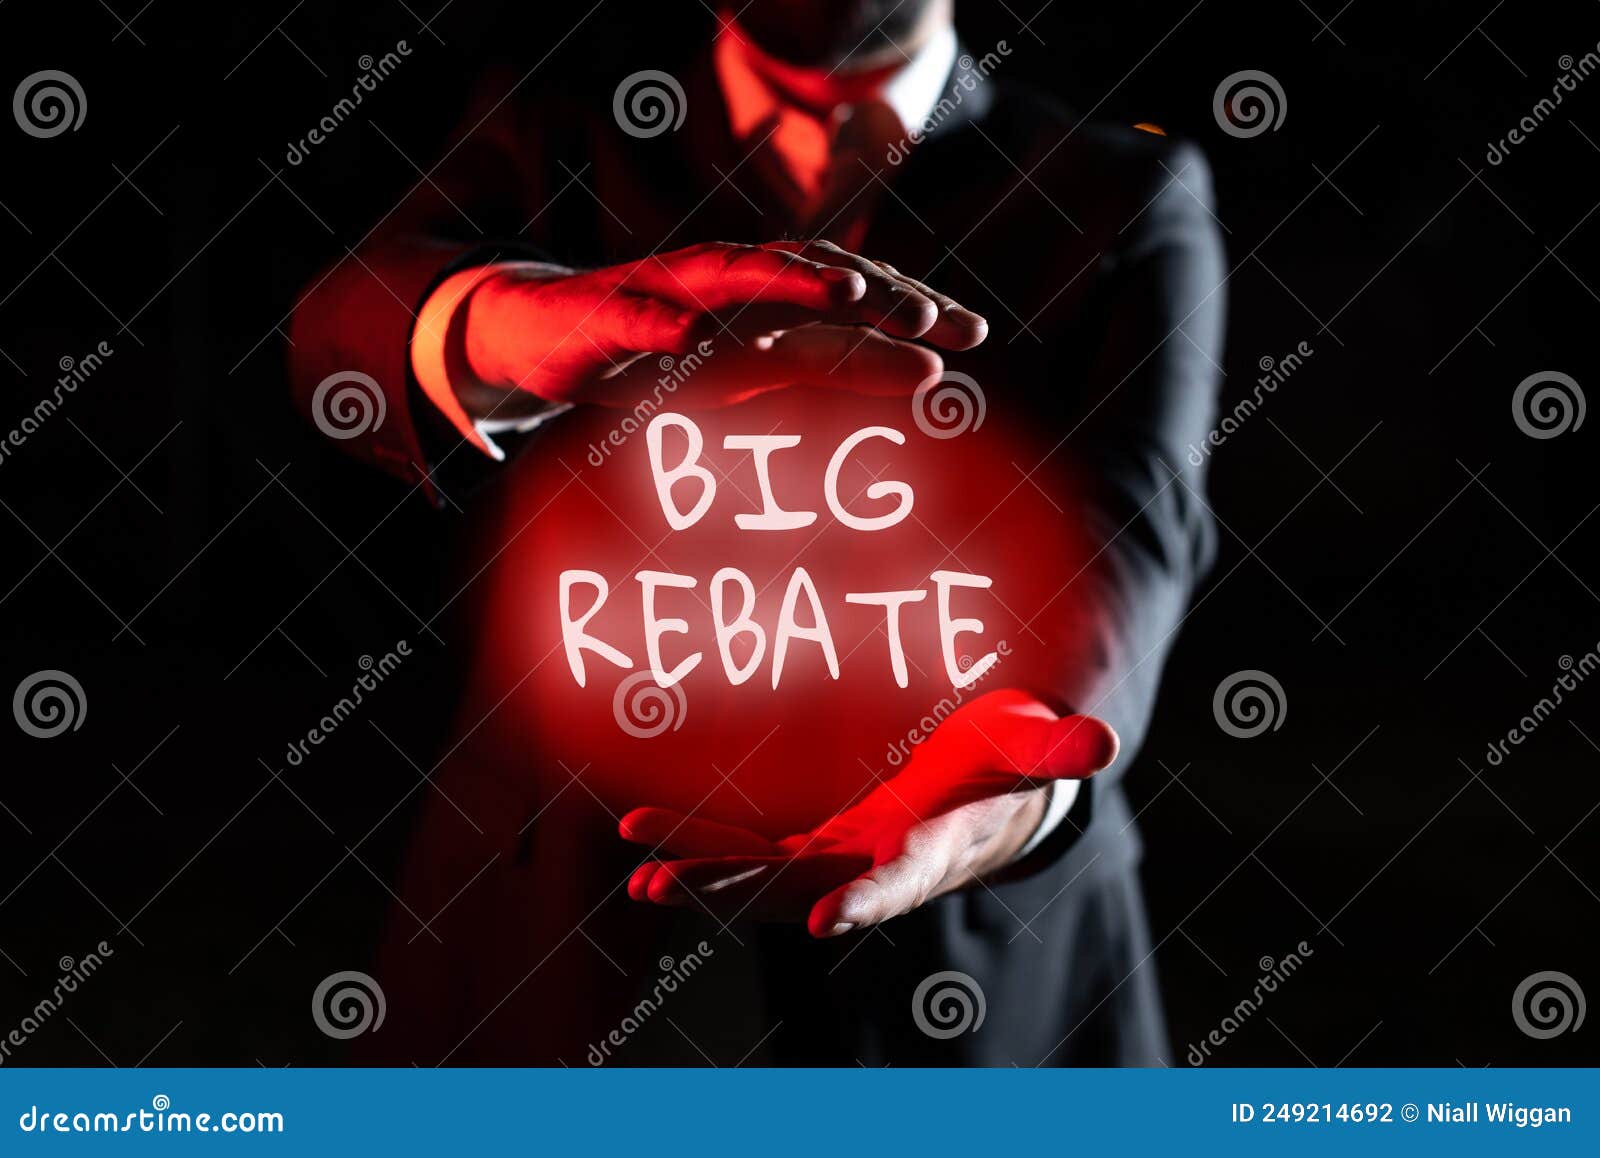 inspiration-showing-sign-big-rebate-word-written-on-huge-rewards-that